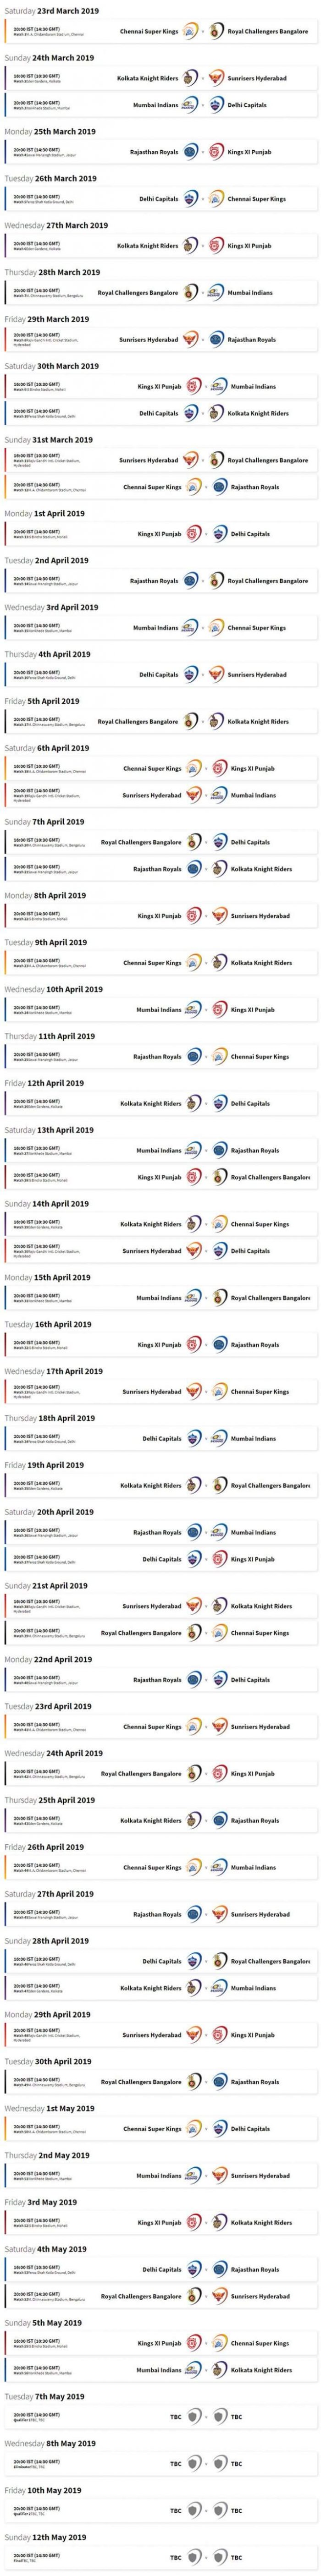 Vivo IPL 2019 Full Schedule